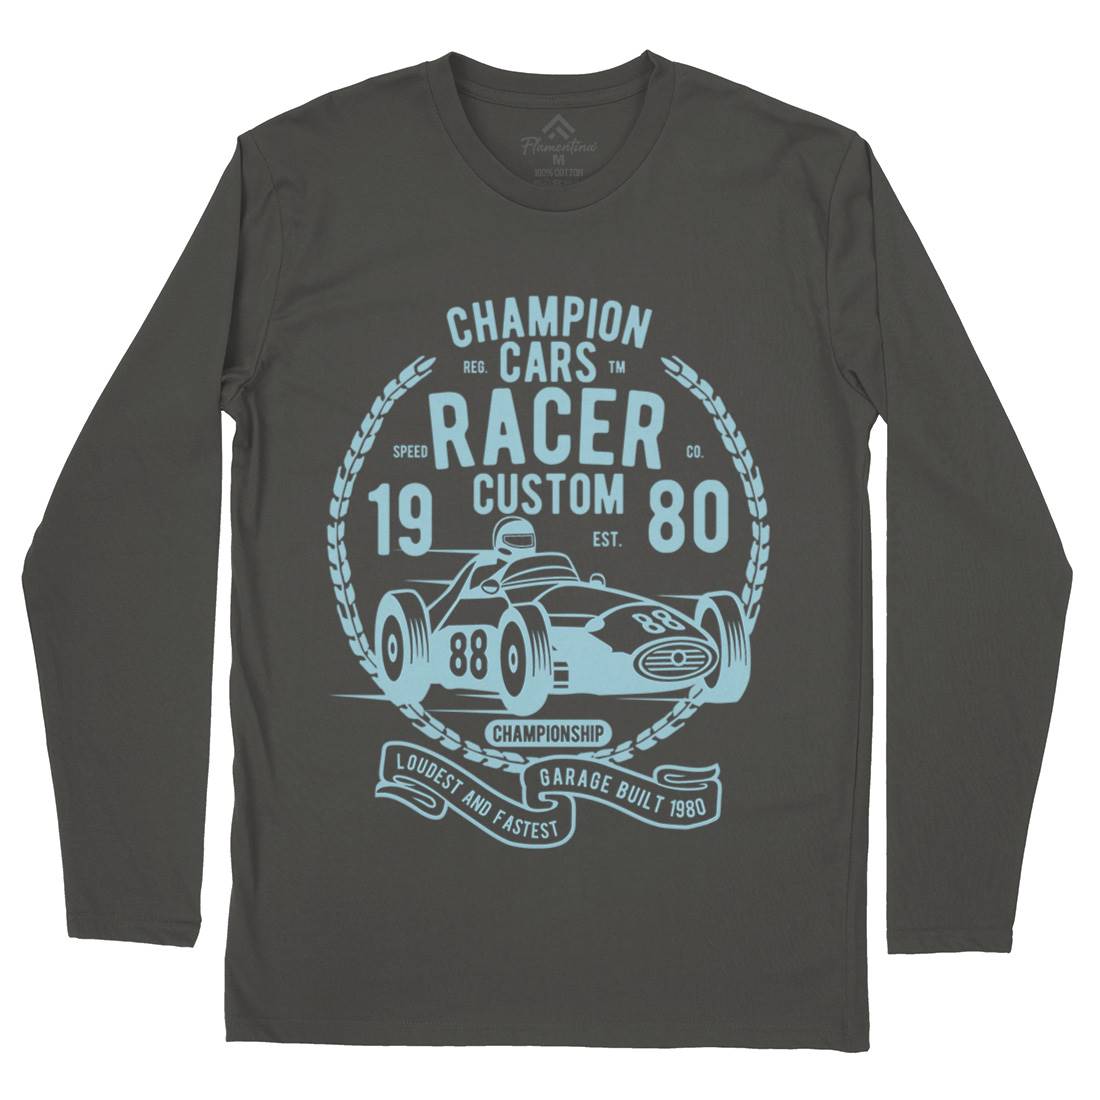 Champion Cars Racer Mens Long Sleeve T-Shirt Cars B395